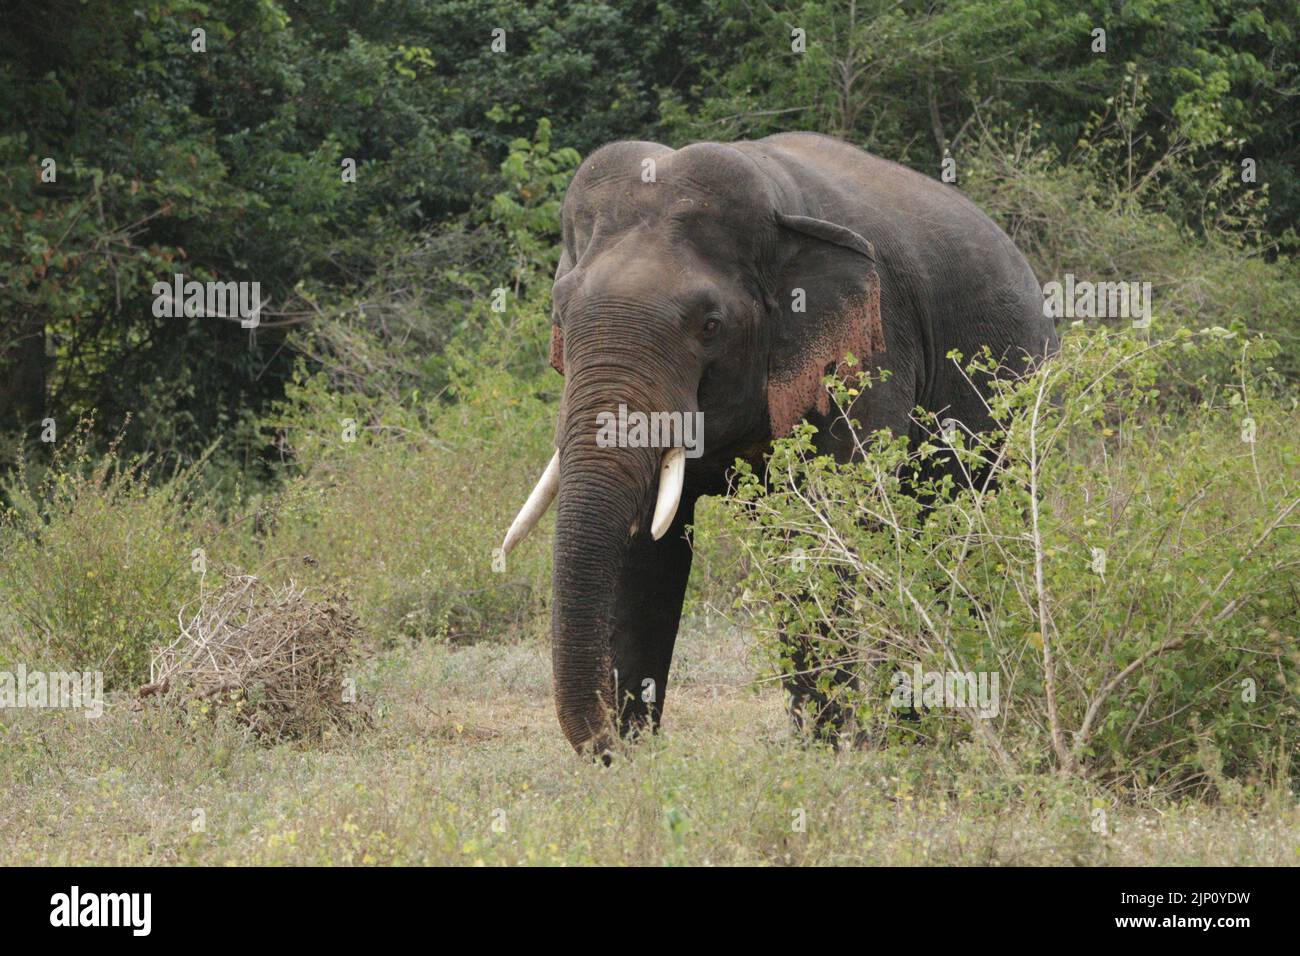 Elephants and Tuskers in Kalawewa National Park, Sri Lanka Stock Photo